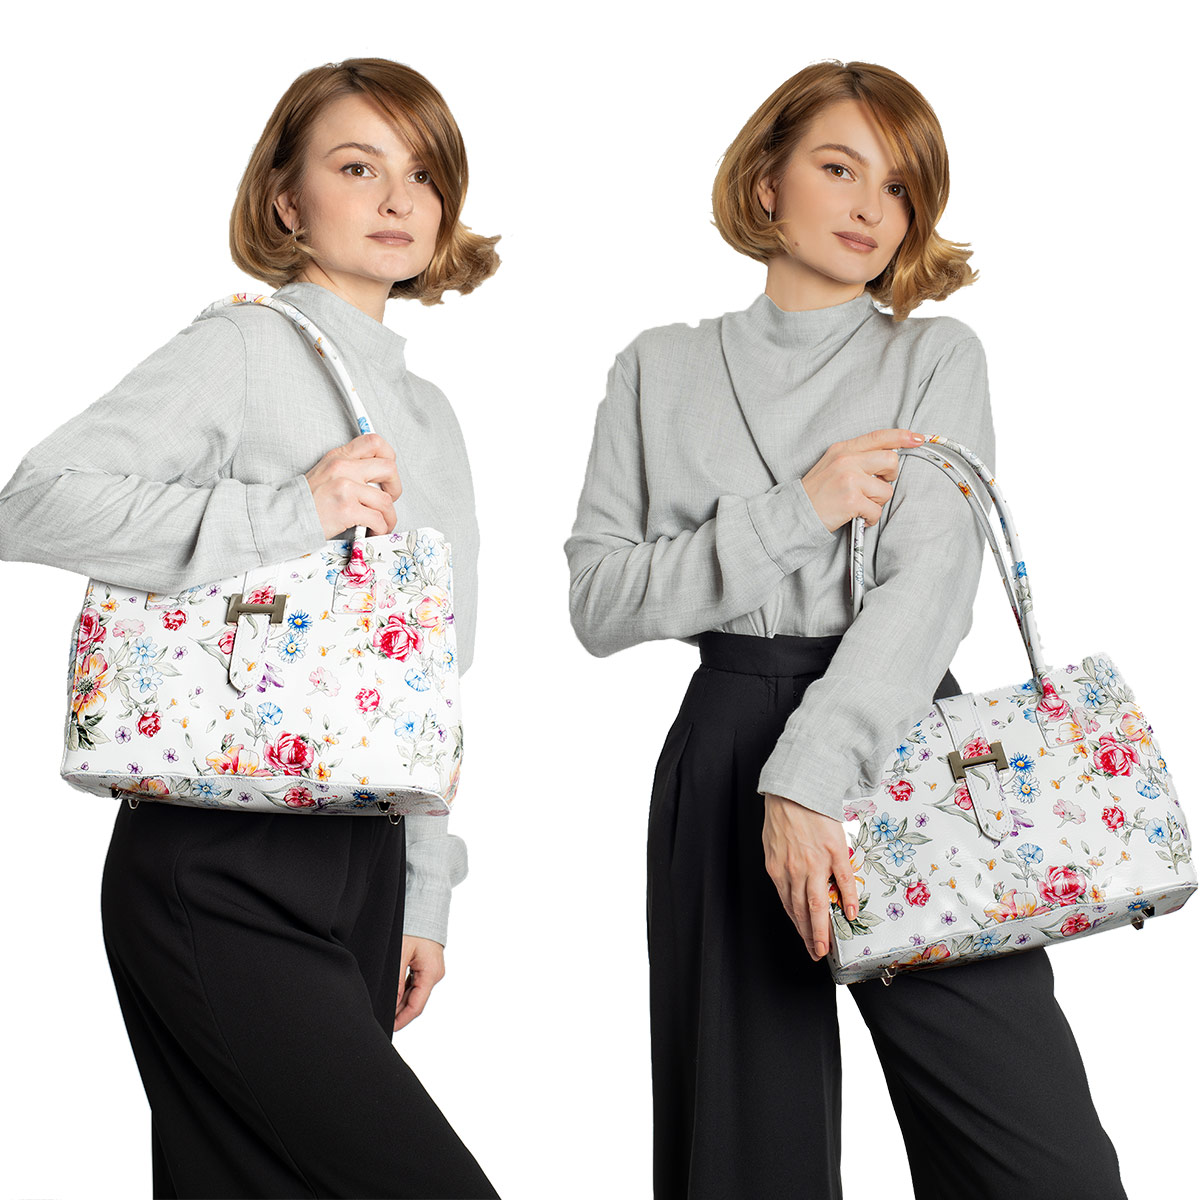 Fioretta Italian Genuine Leather Shoulder Bag Tote Handbag For Women